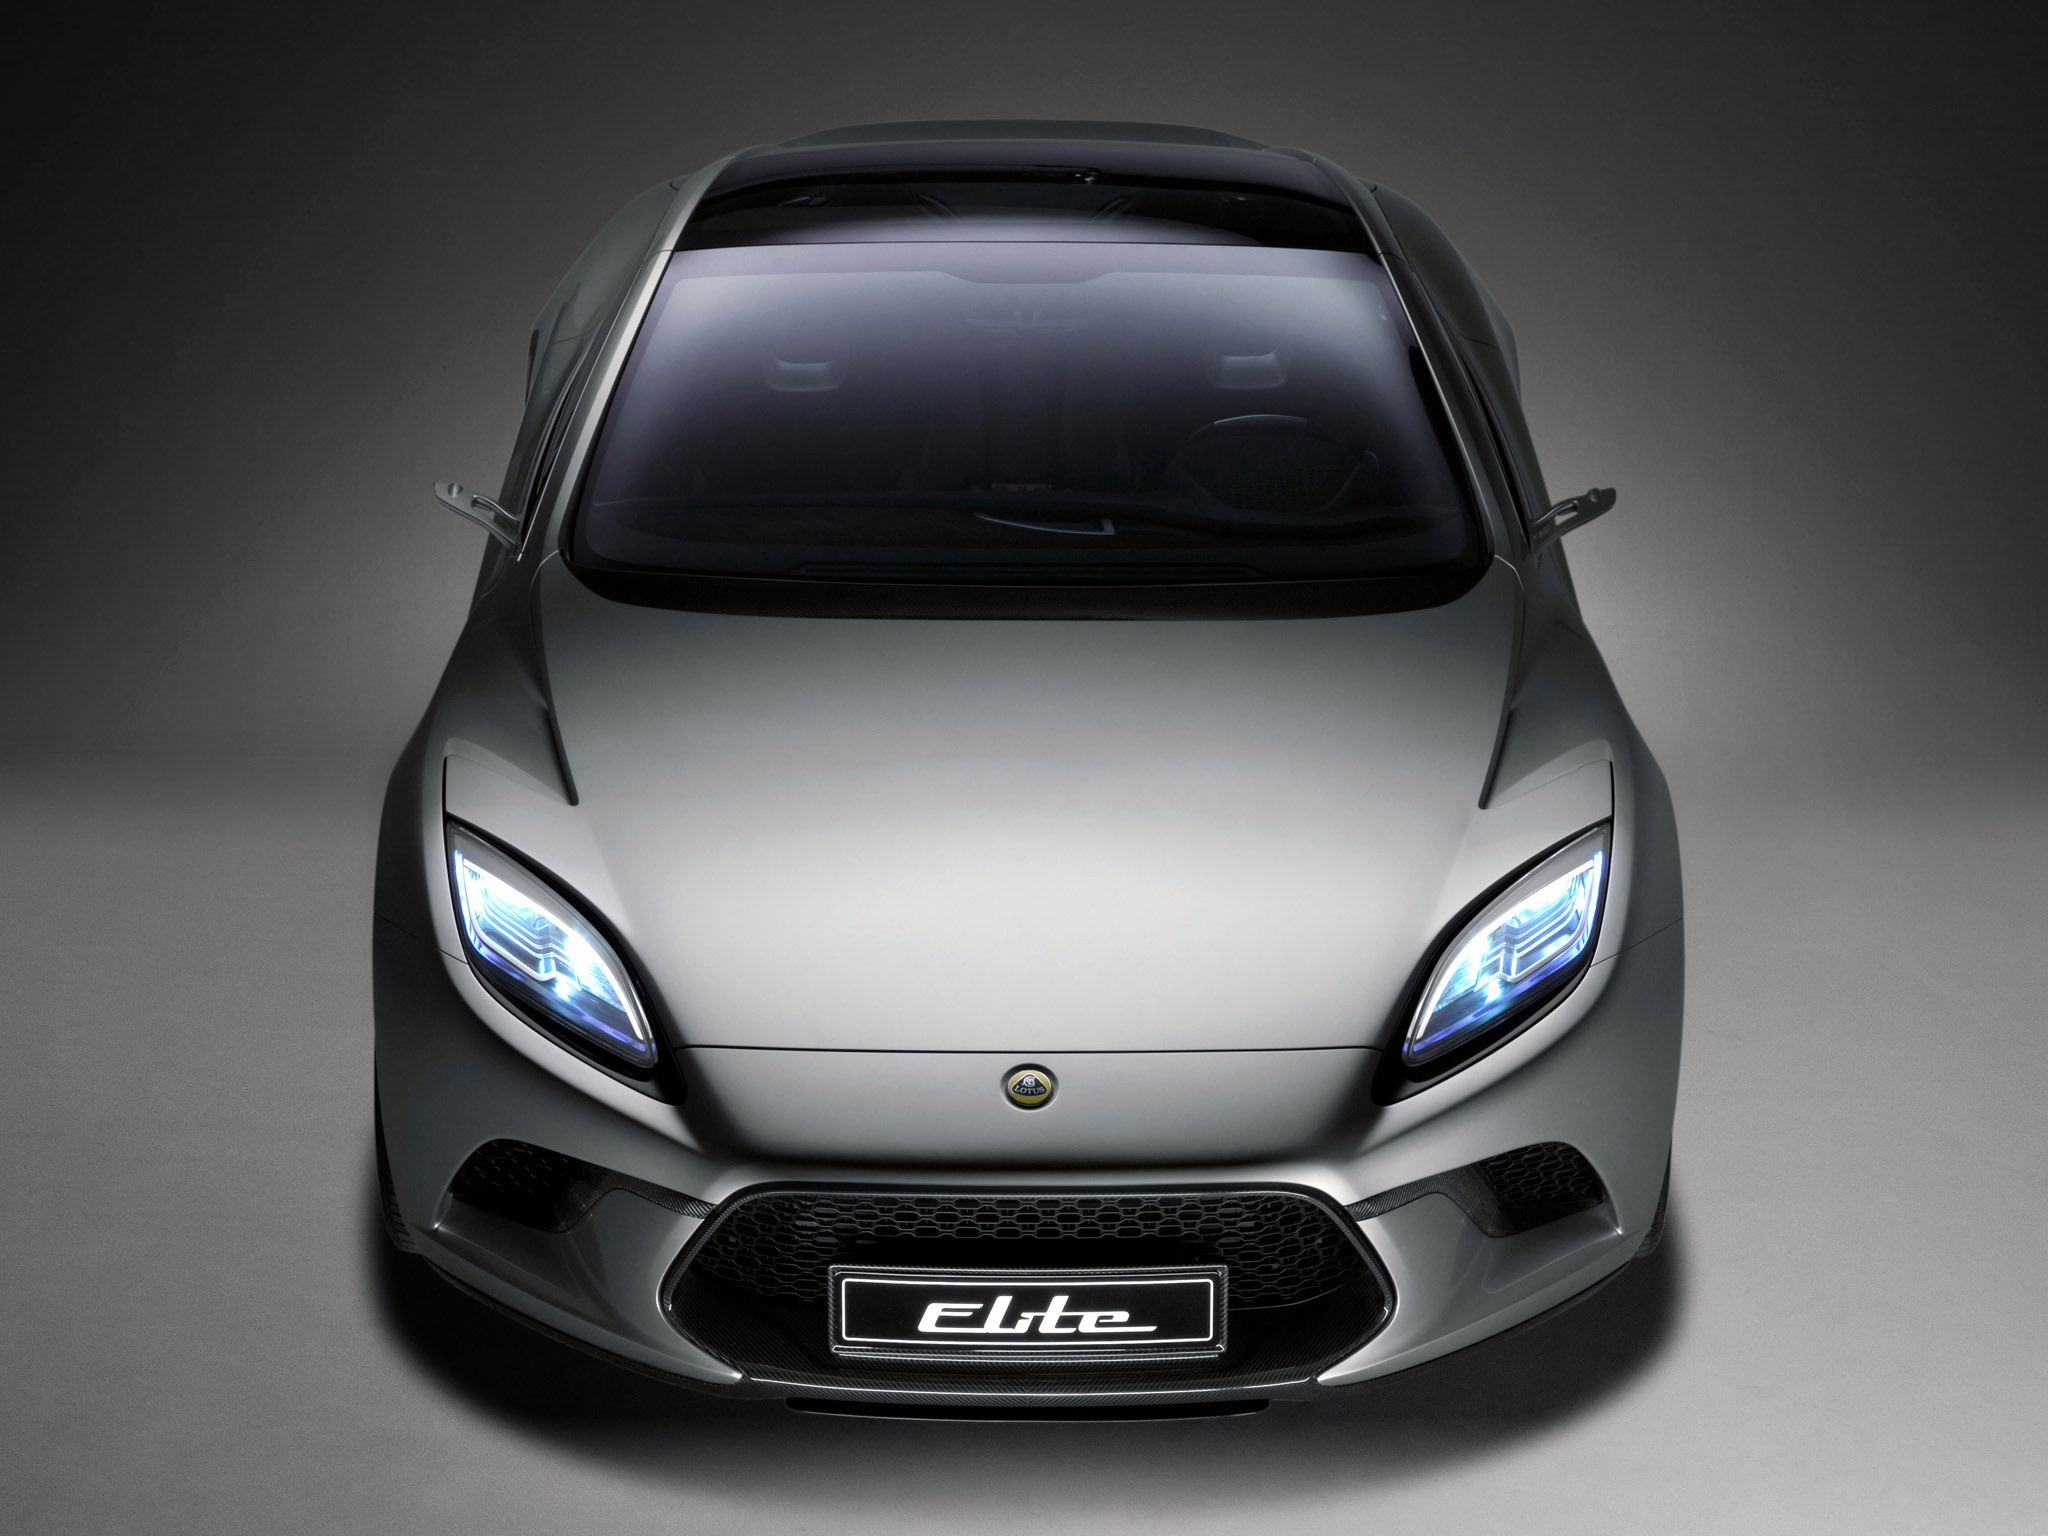 2010, Lotus, Elite, Concept, Supercar, Supercars Wallpaper